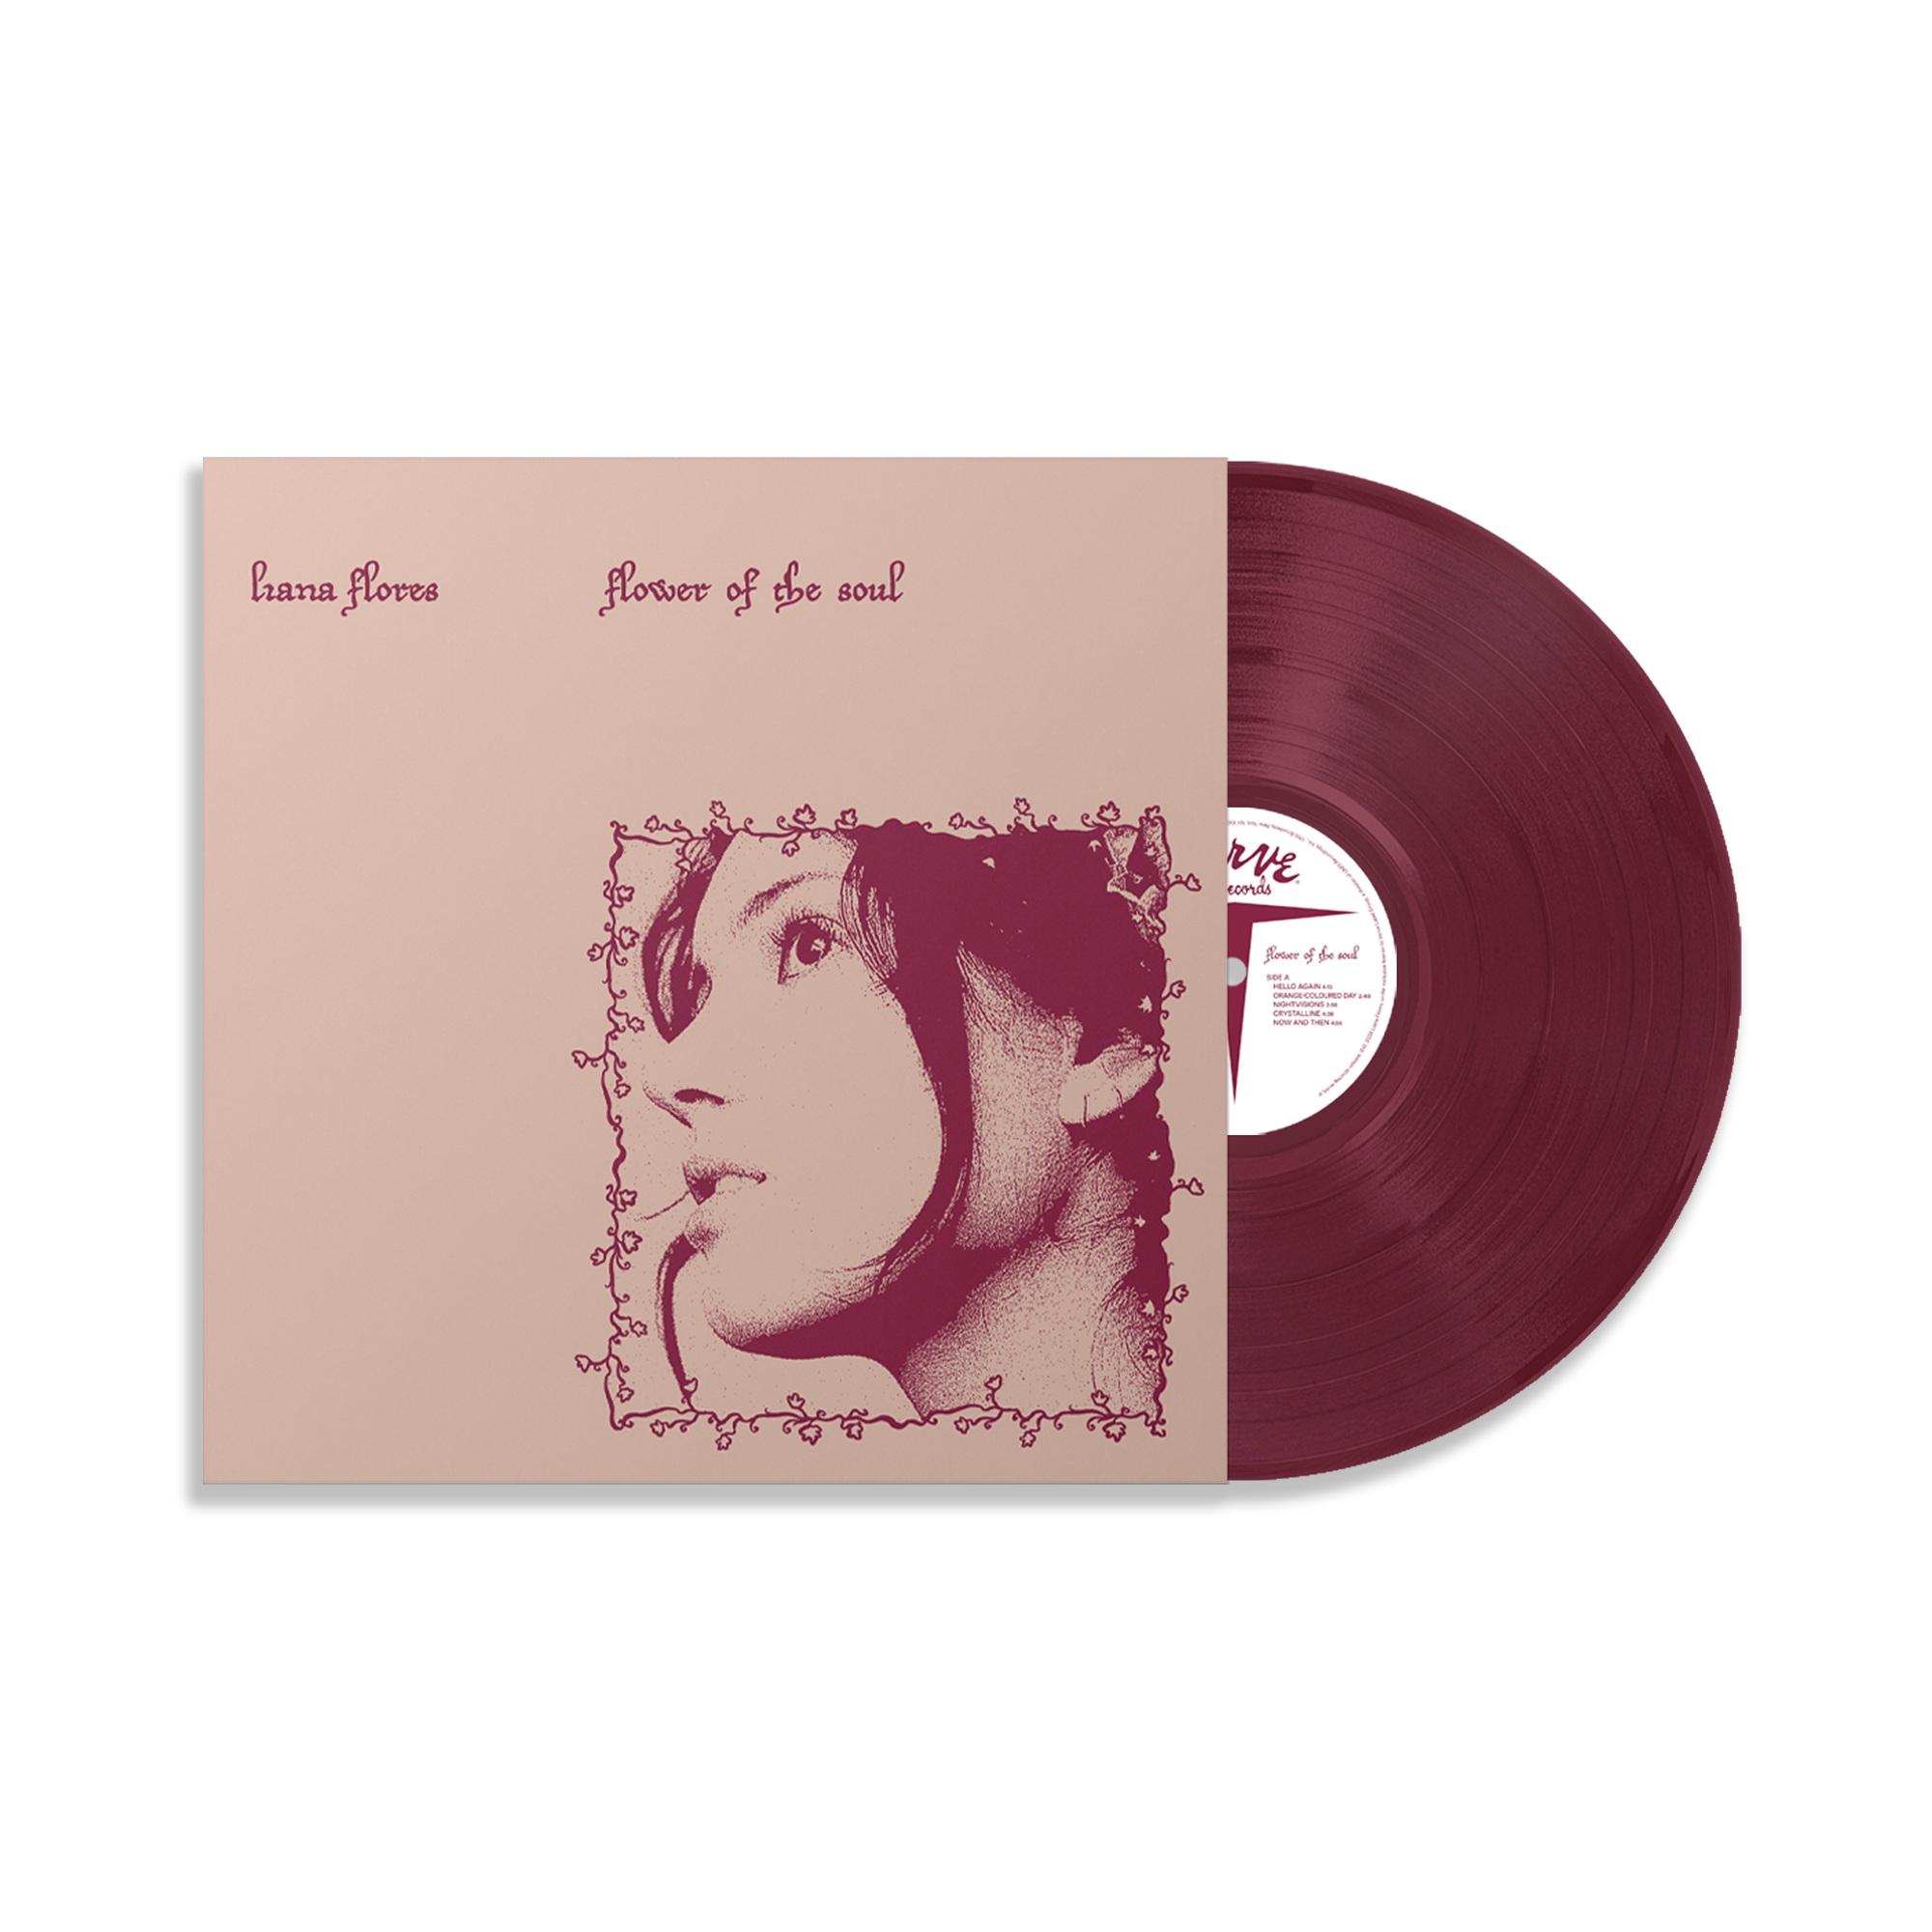 Flower of the soul: limited summer berry vinyl lp + cd bundle